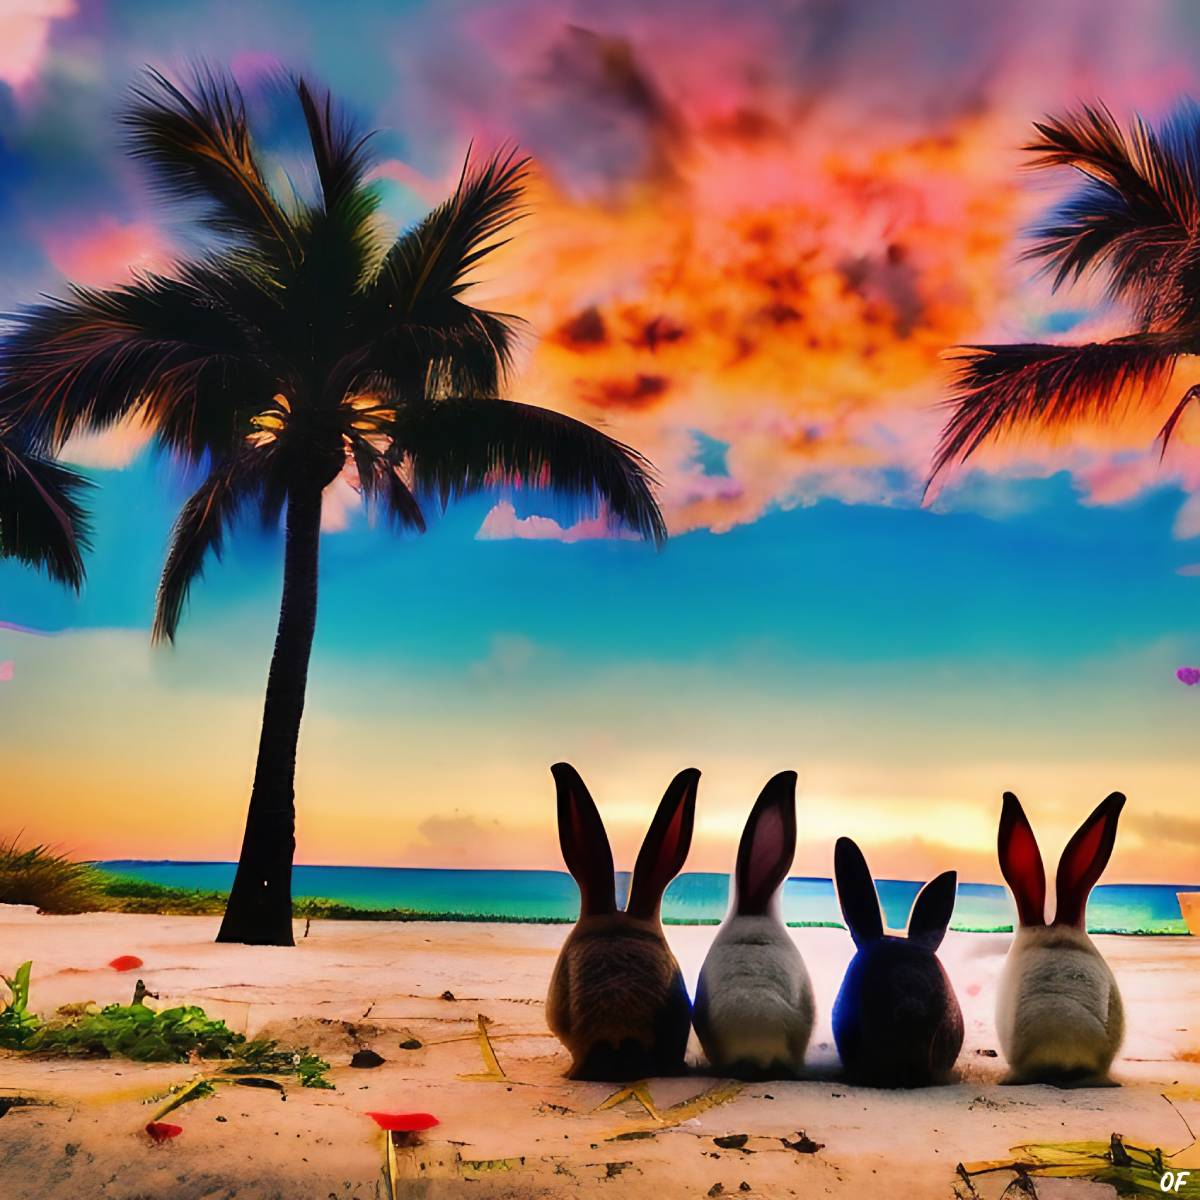 An artists impression of Rabbit Island.